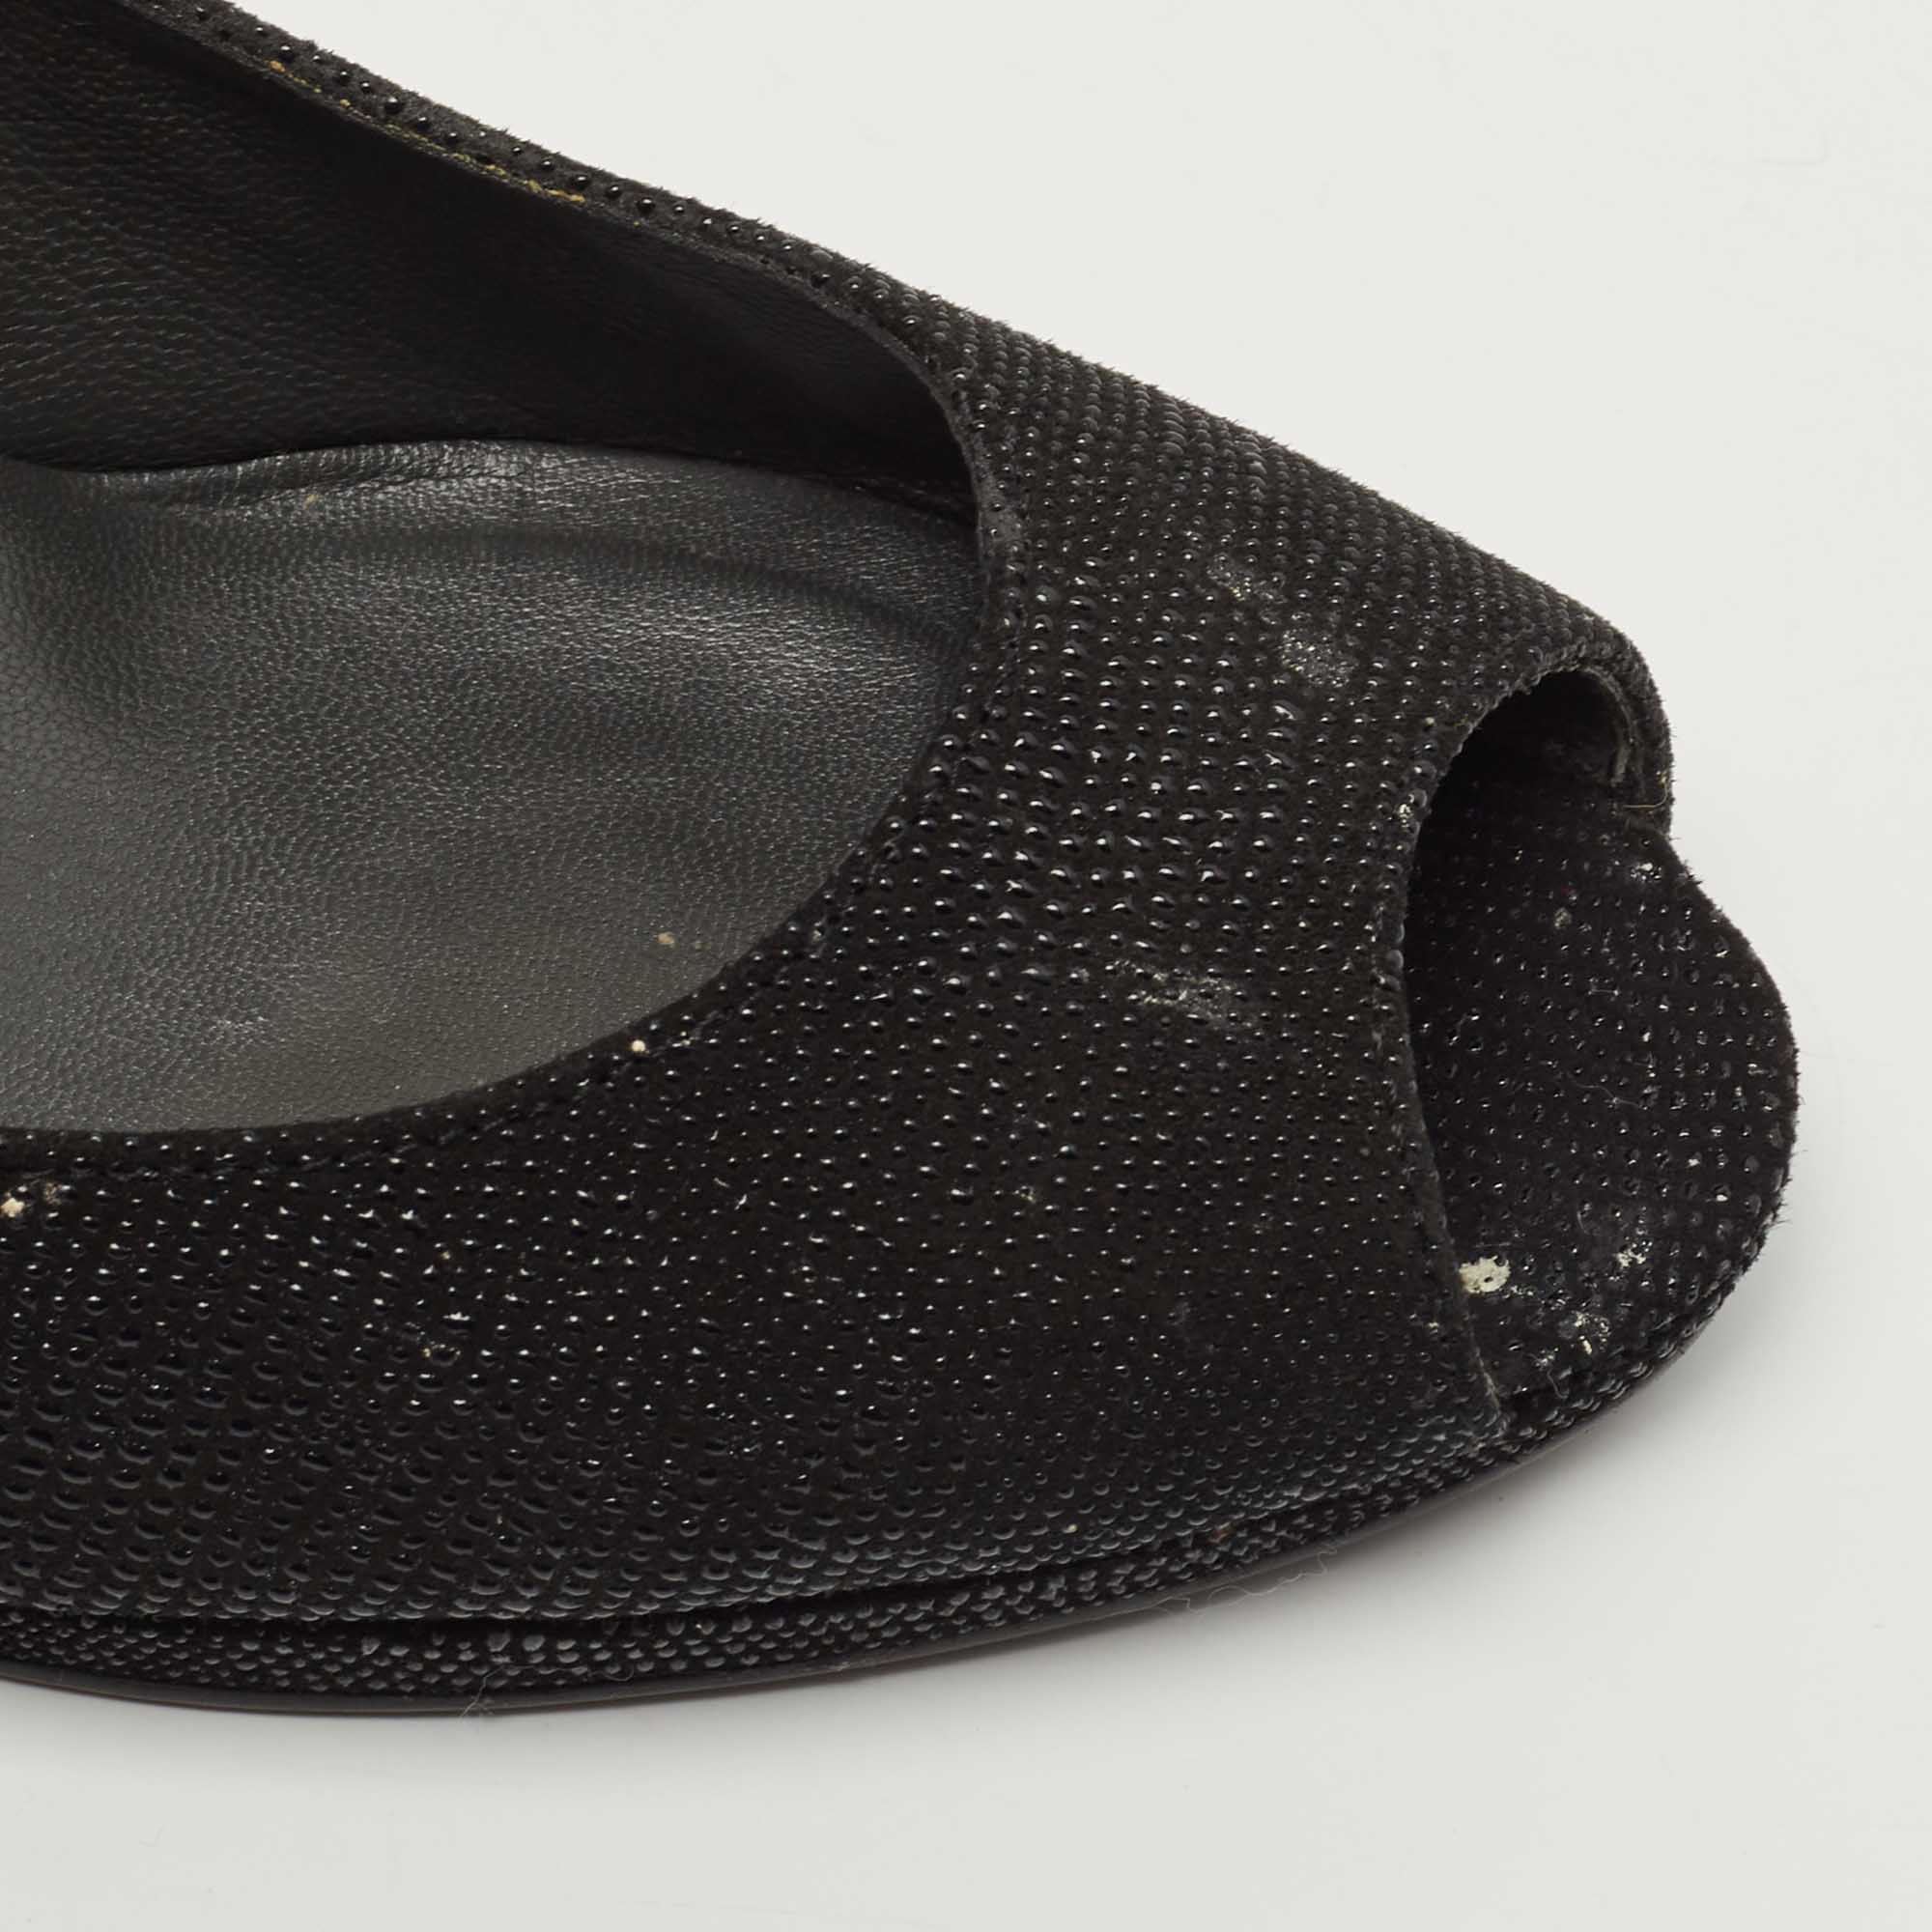 Stuart Weitzman Black Textured Leather Peep Toe Platform Pumps Size 38